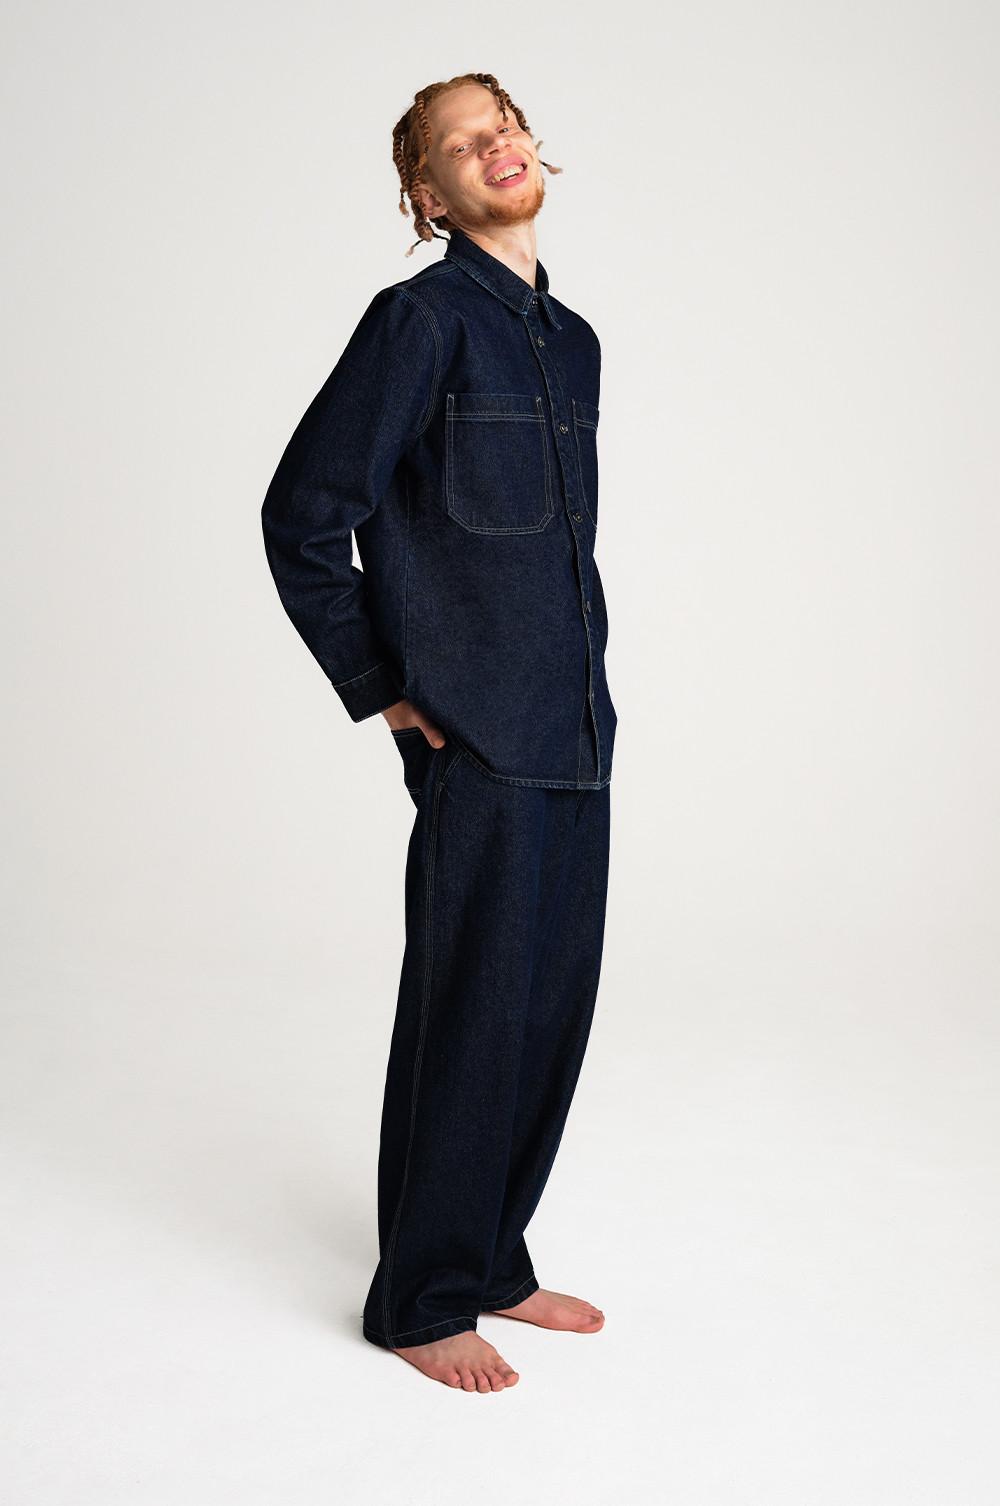 Model in marineblauen Jeans